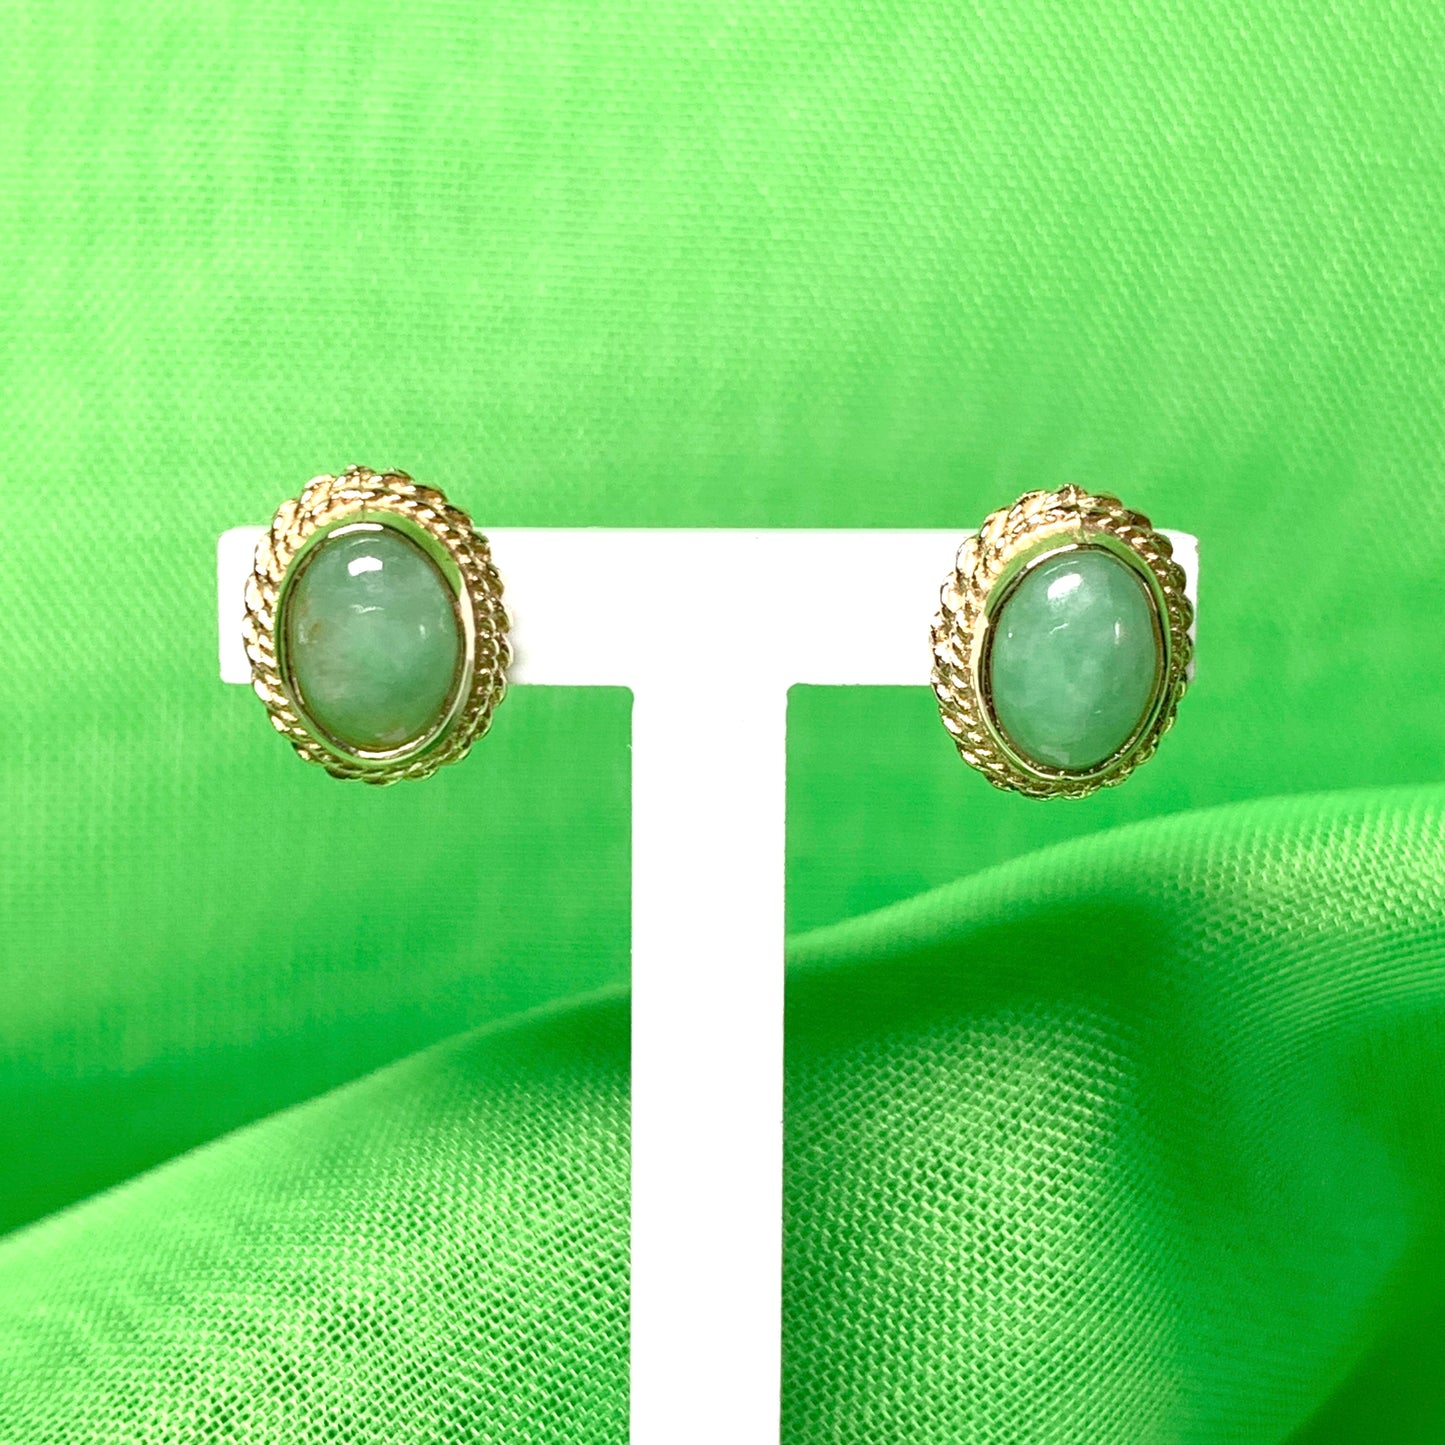 Oval green jade yellow gold earrings